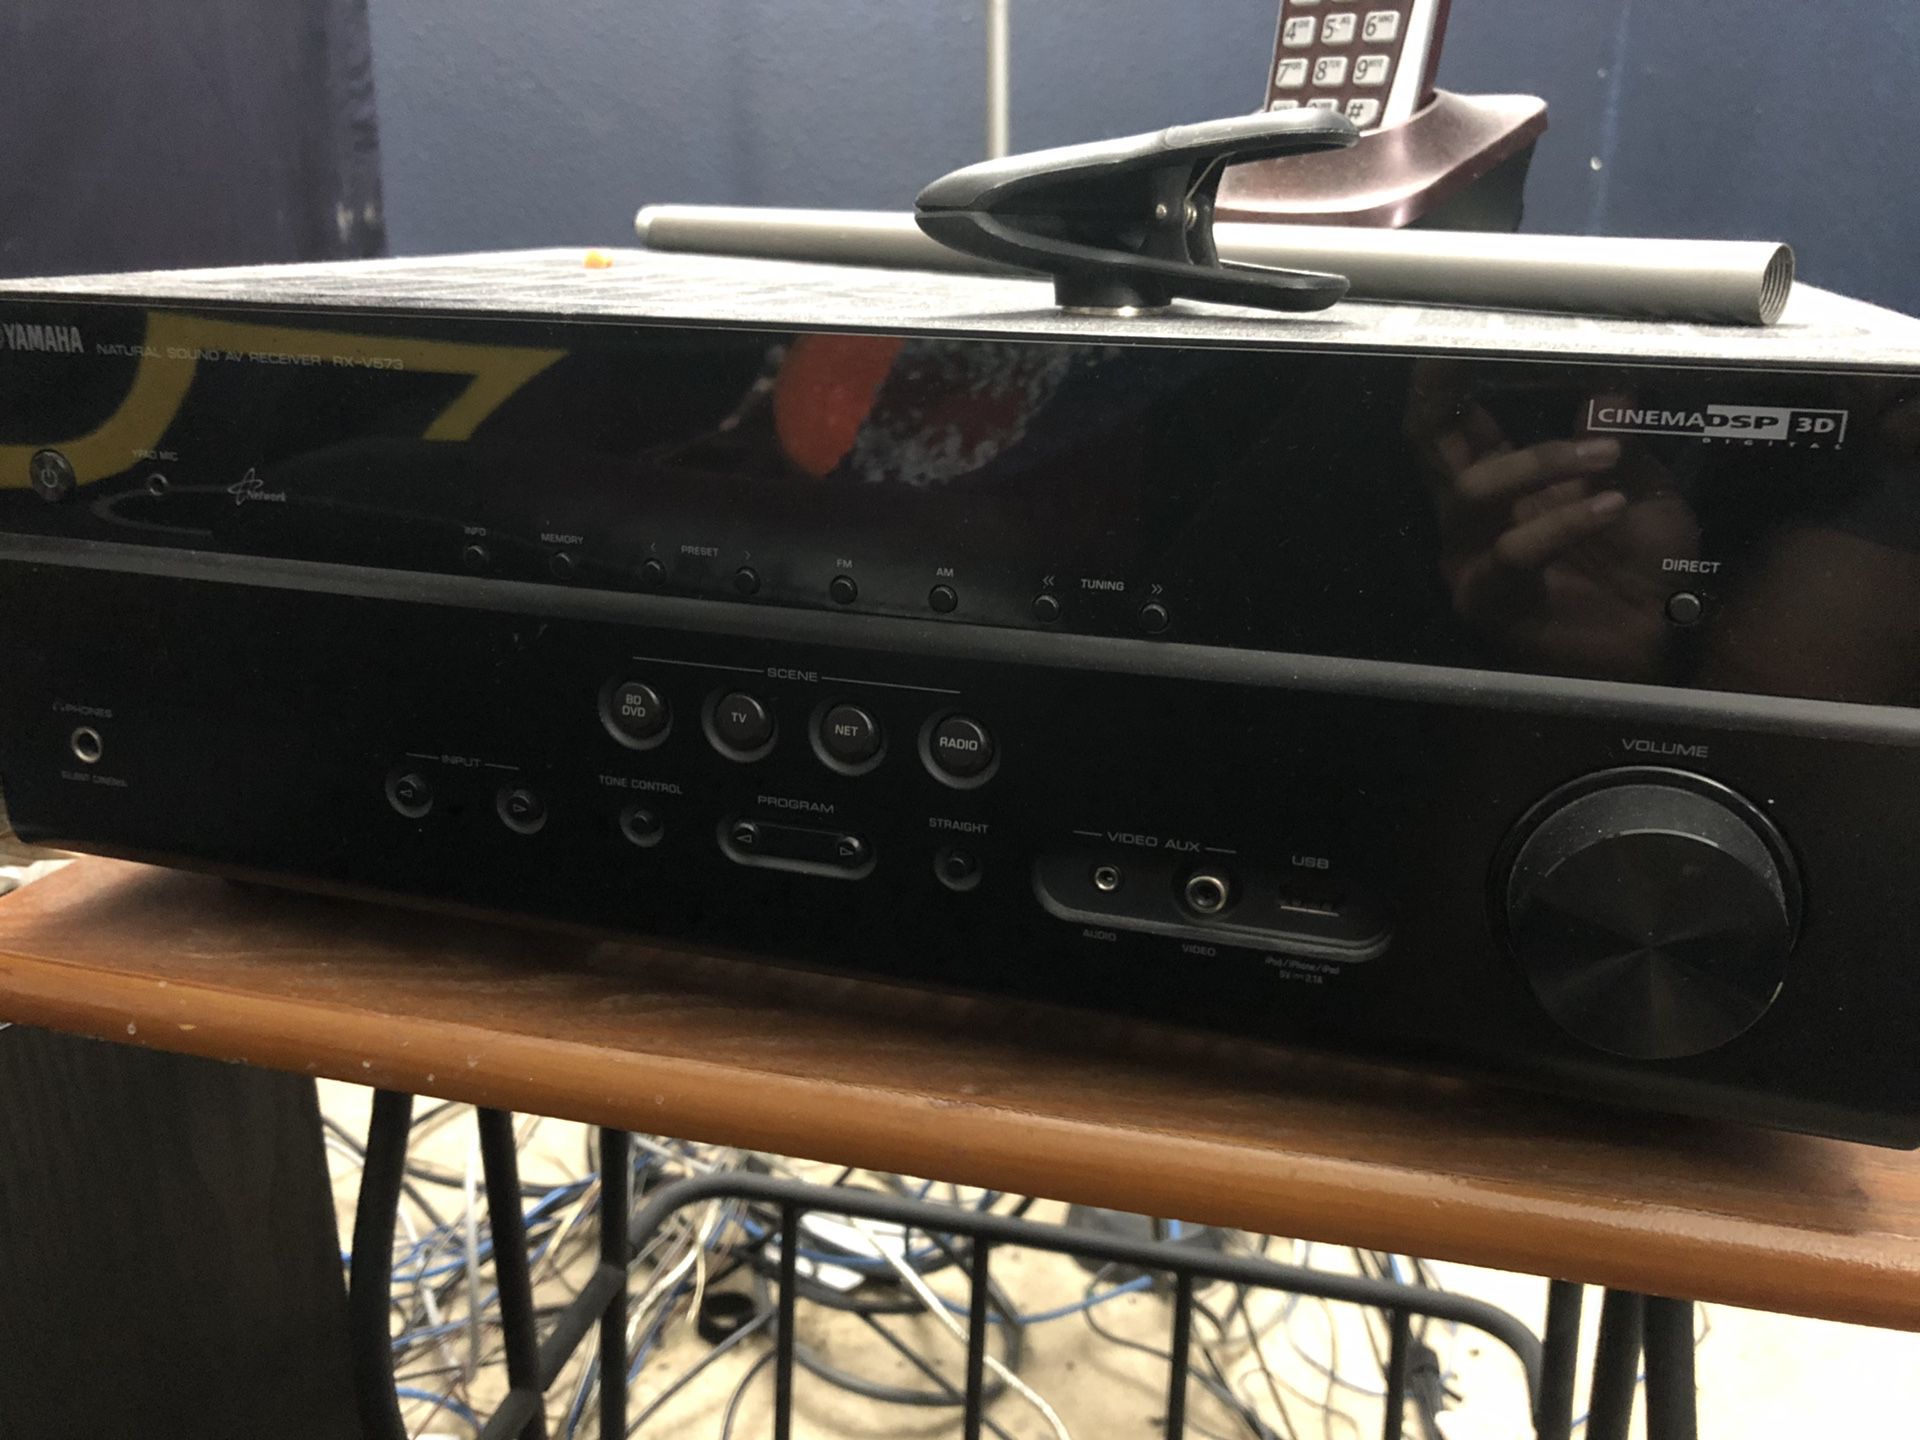 Yamaha 7.1 Surround Sound receiver and Onkyo Speakers